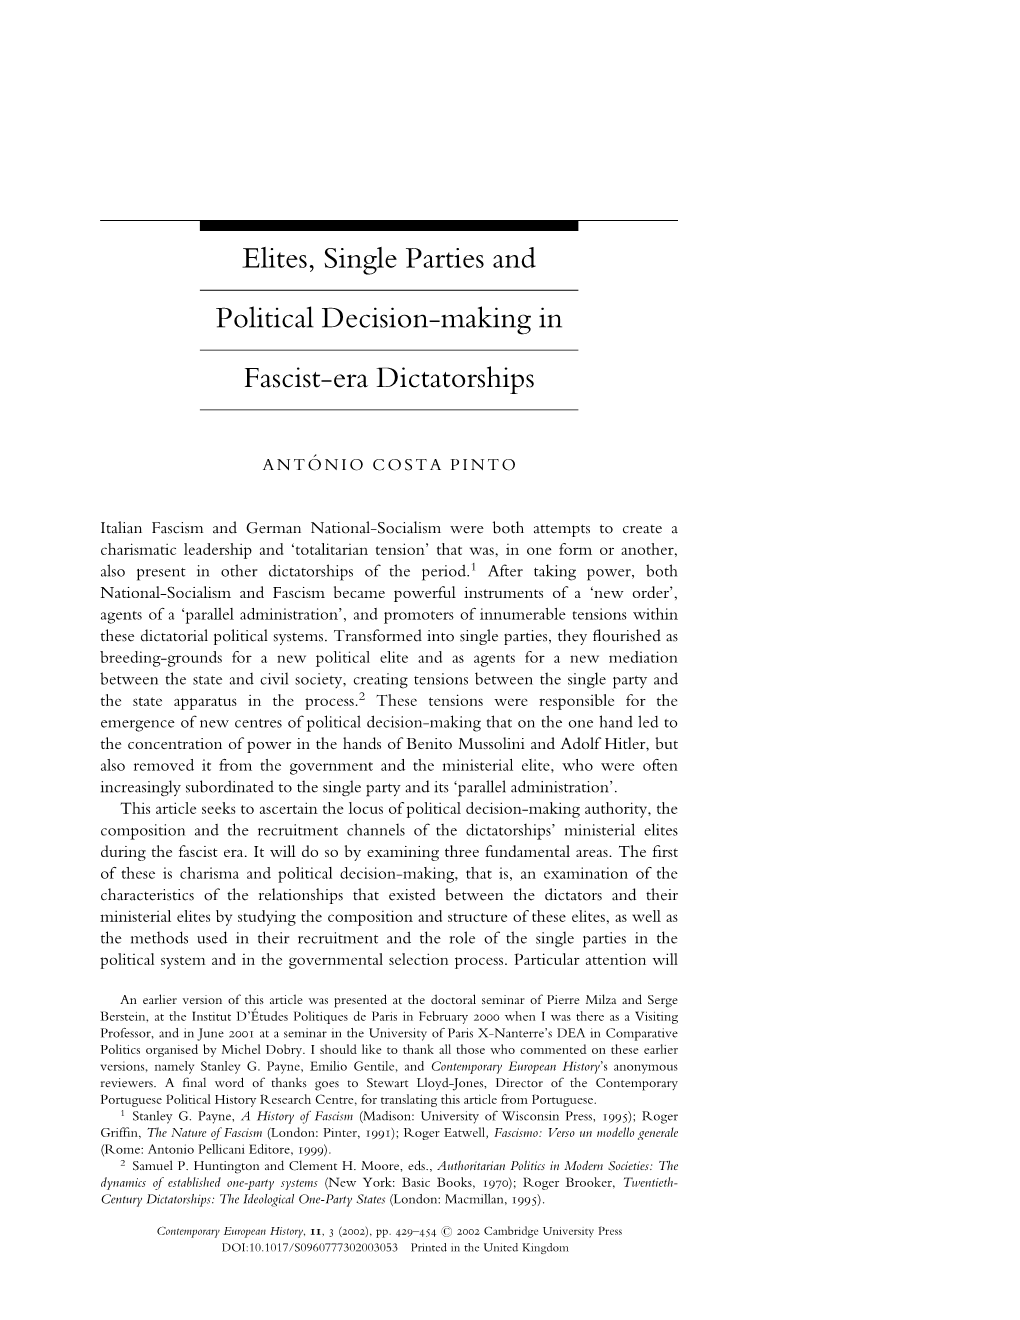 Elites, Single Parties and Political Decision-Making in Fascist-Era Dictatorships